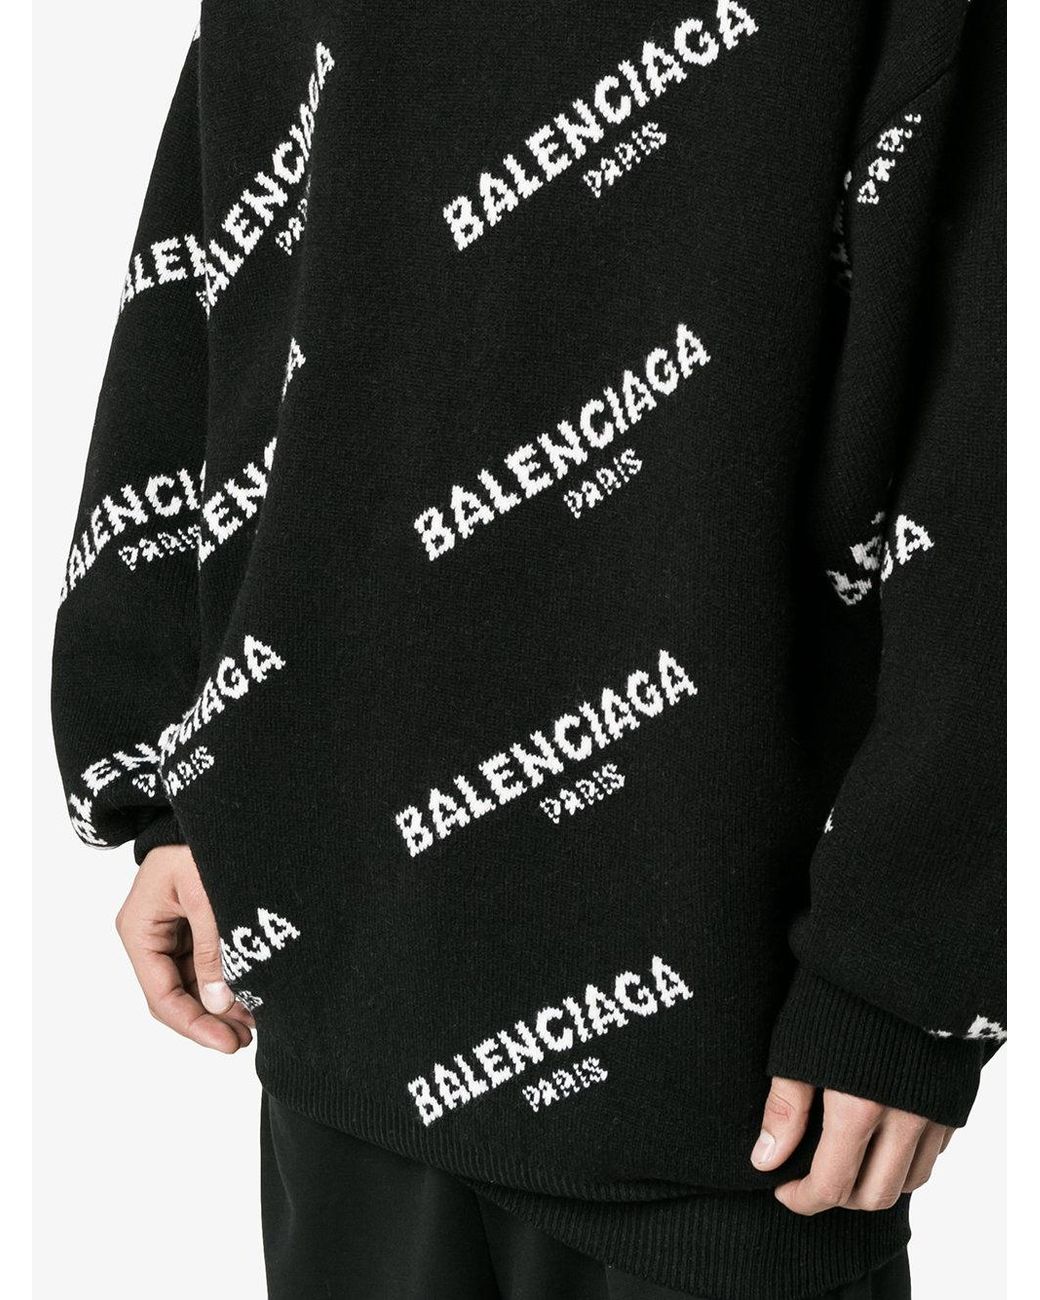 Balenciaga Oversized All-over Logo Sweatshirt in for | Lyst